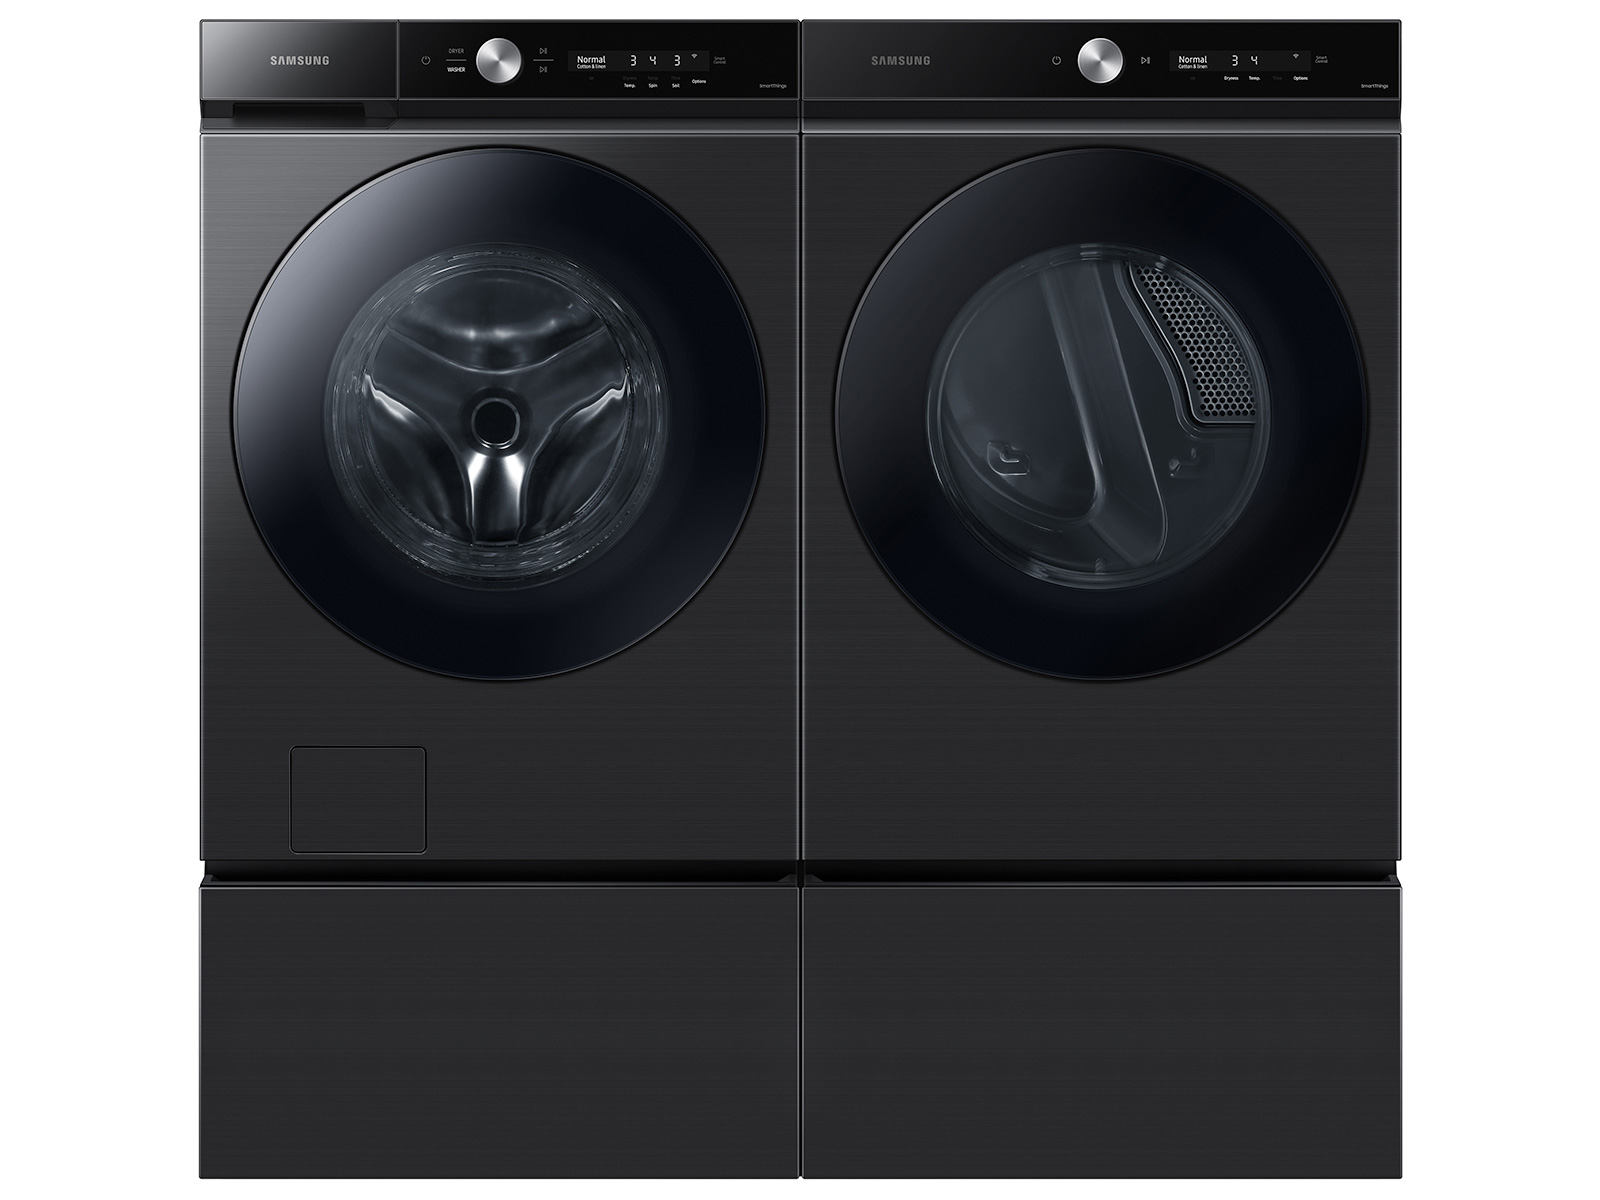 WE402NP Samsung 14.2 in. Platinum Laundry Pedestal with Storage Drawer -  Black Friday